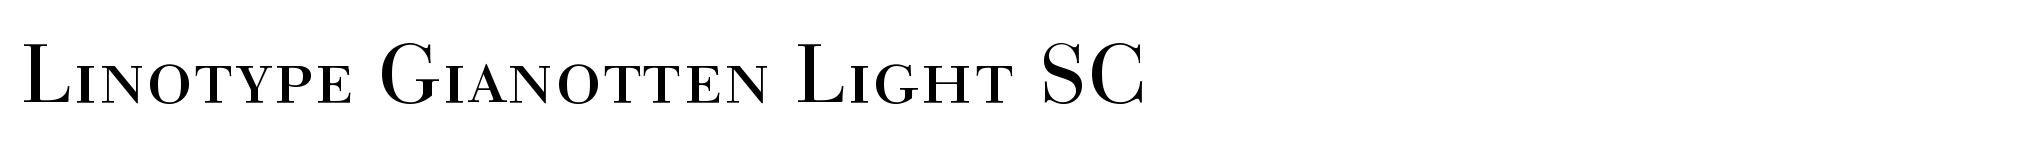 Linotype Gianotten Light SC image